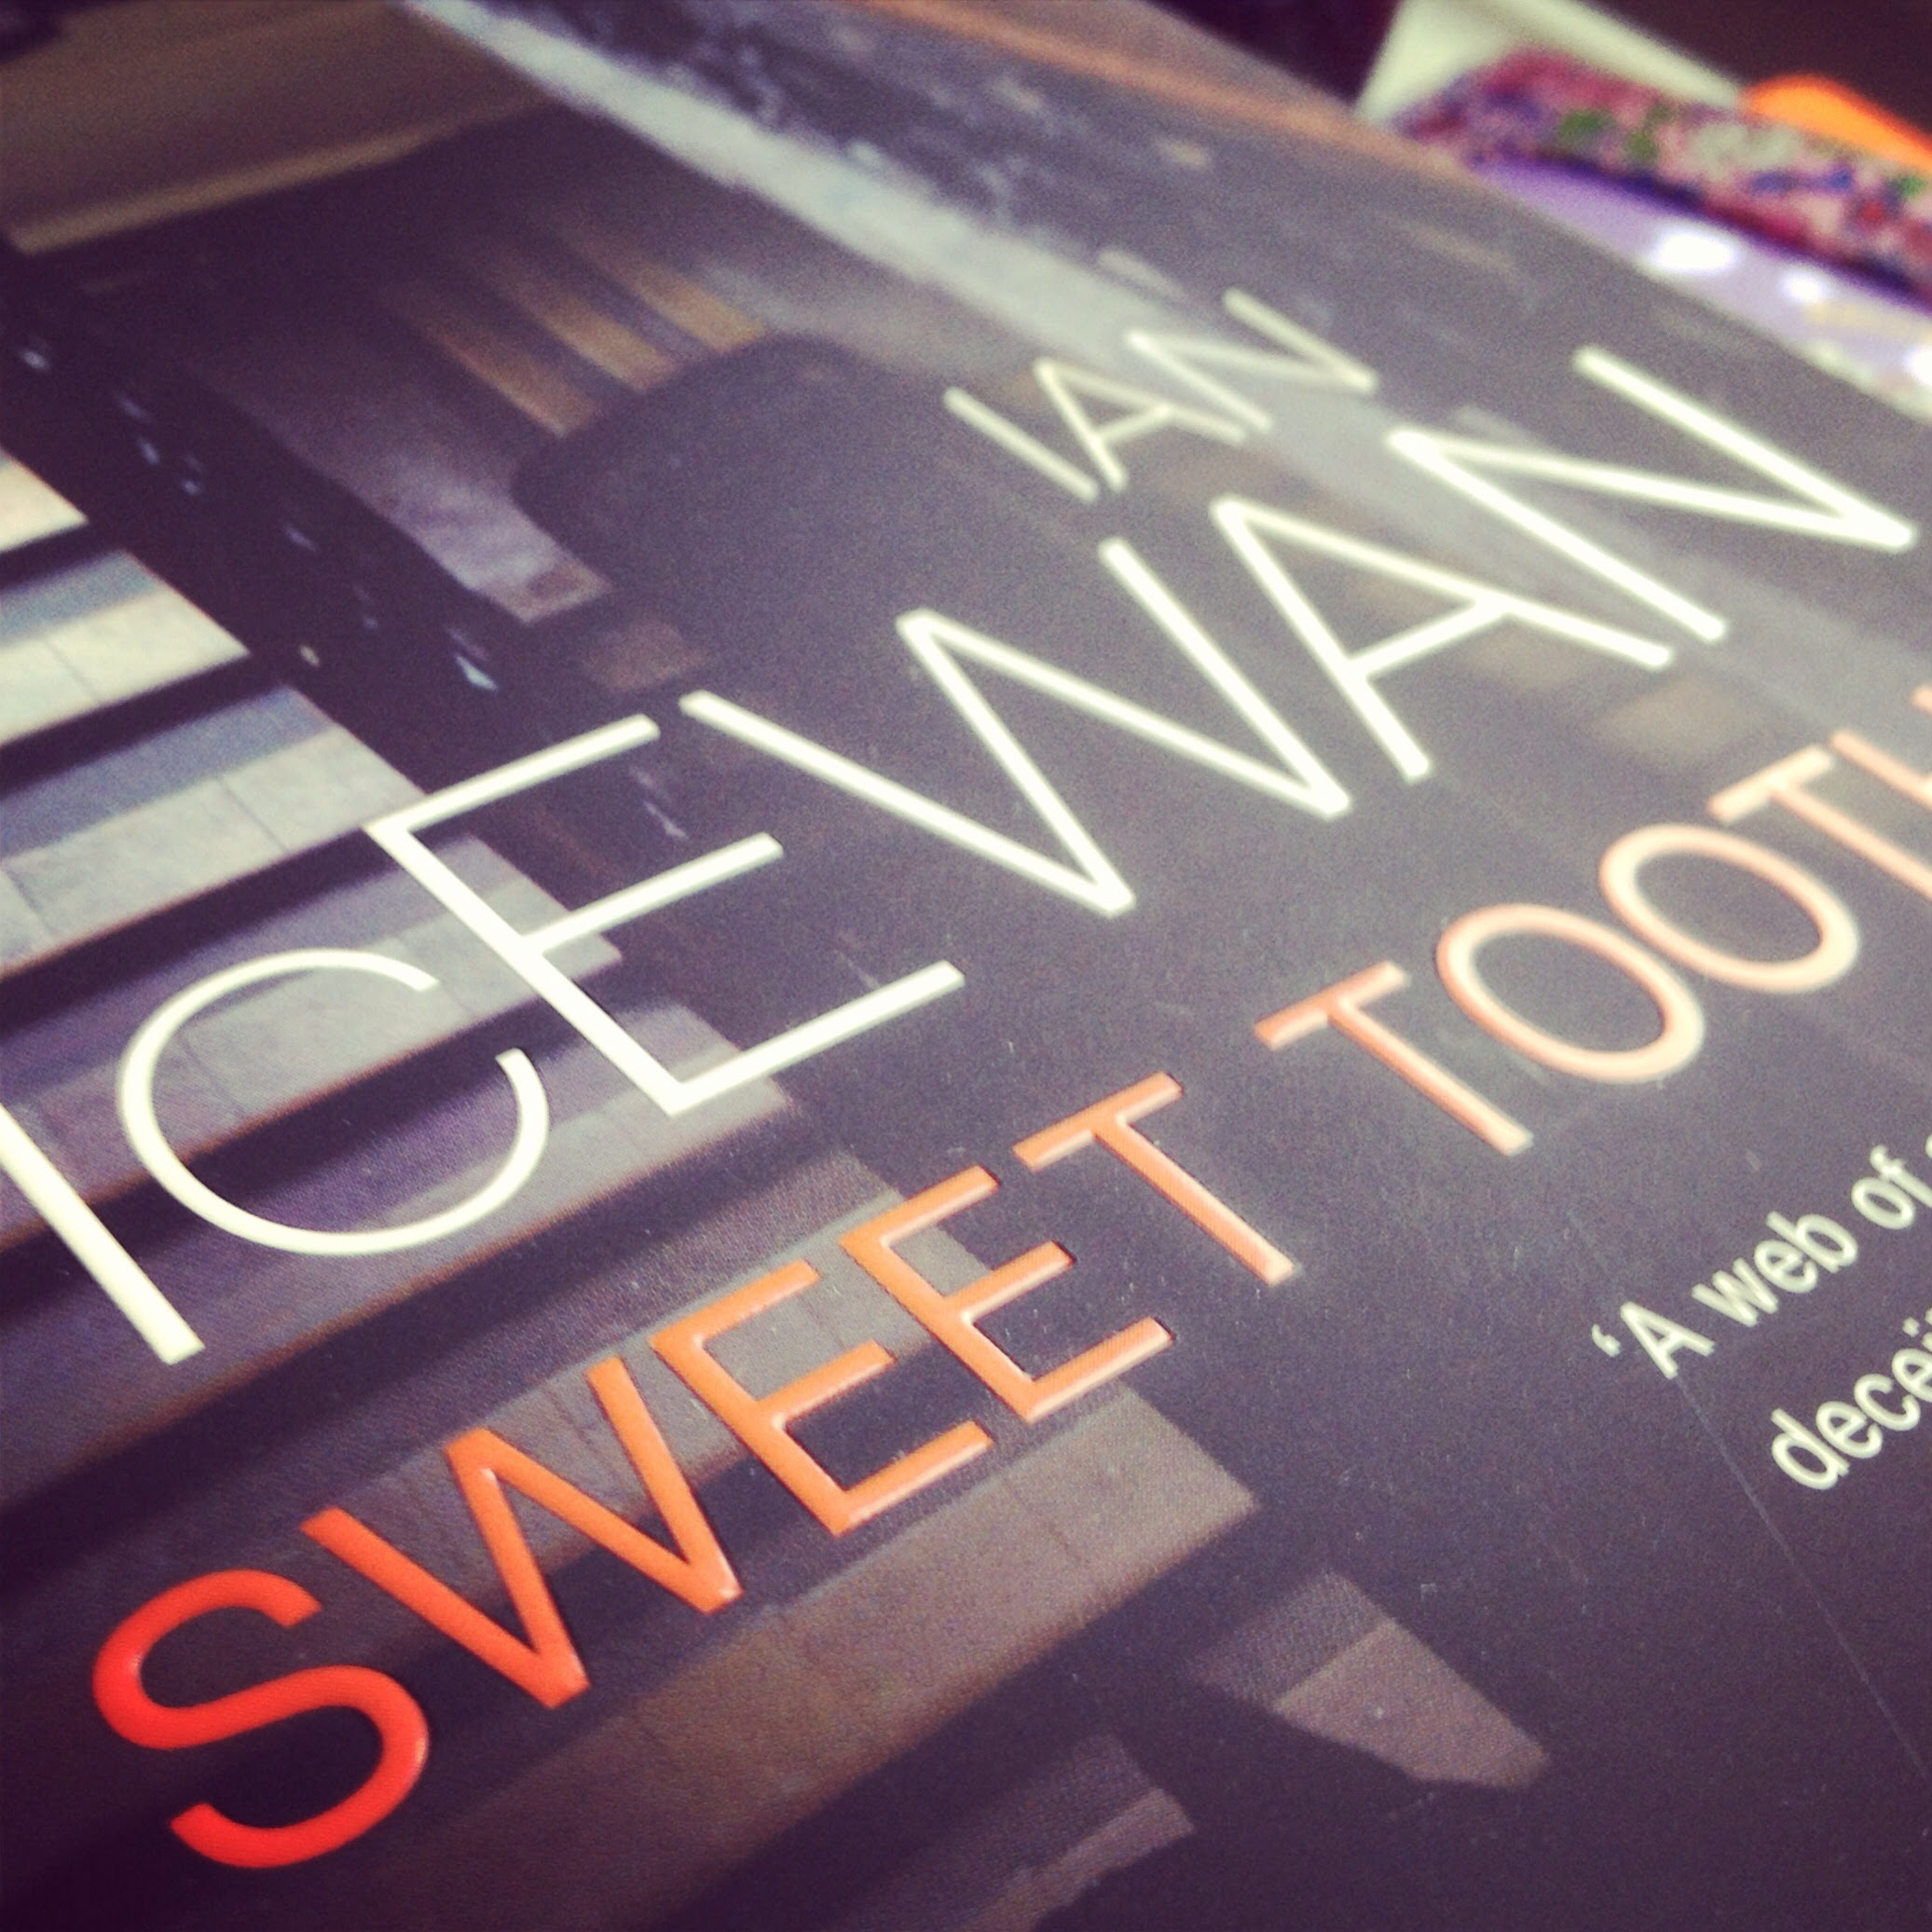 Sweet Tooth, Ian McEwan